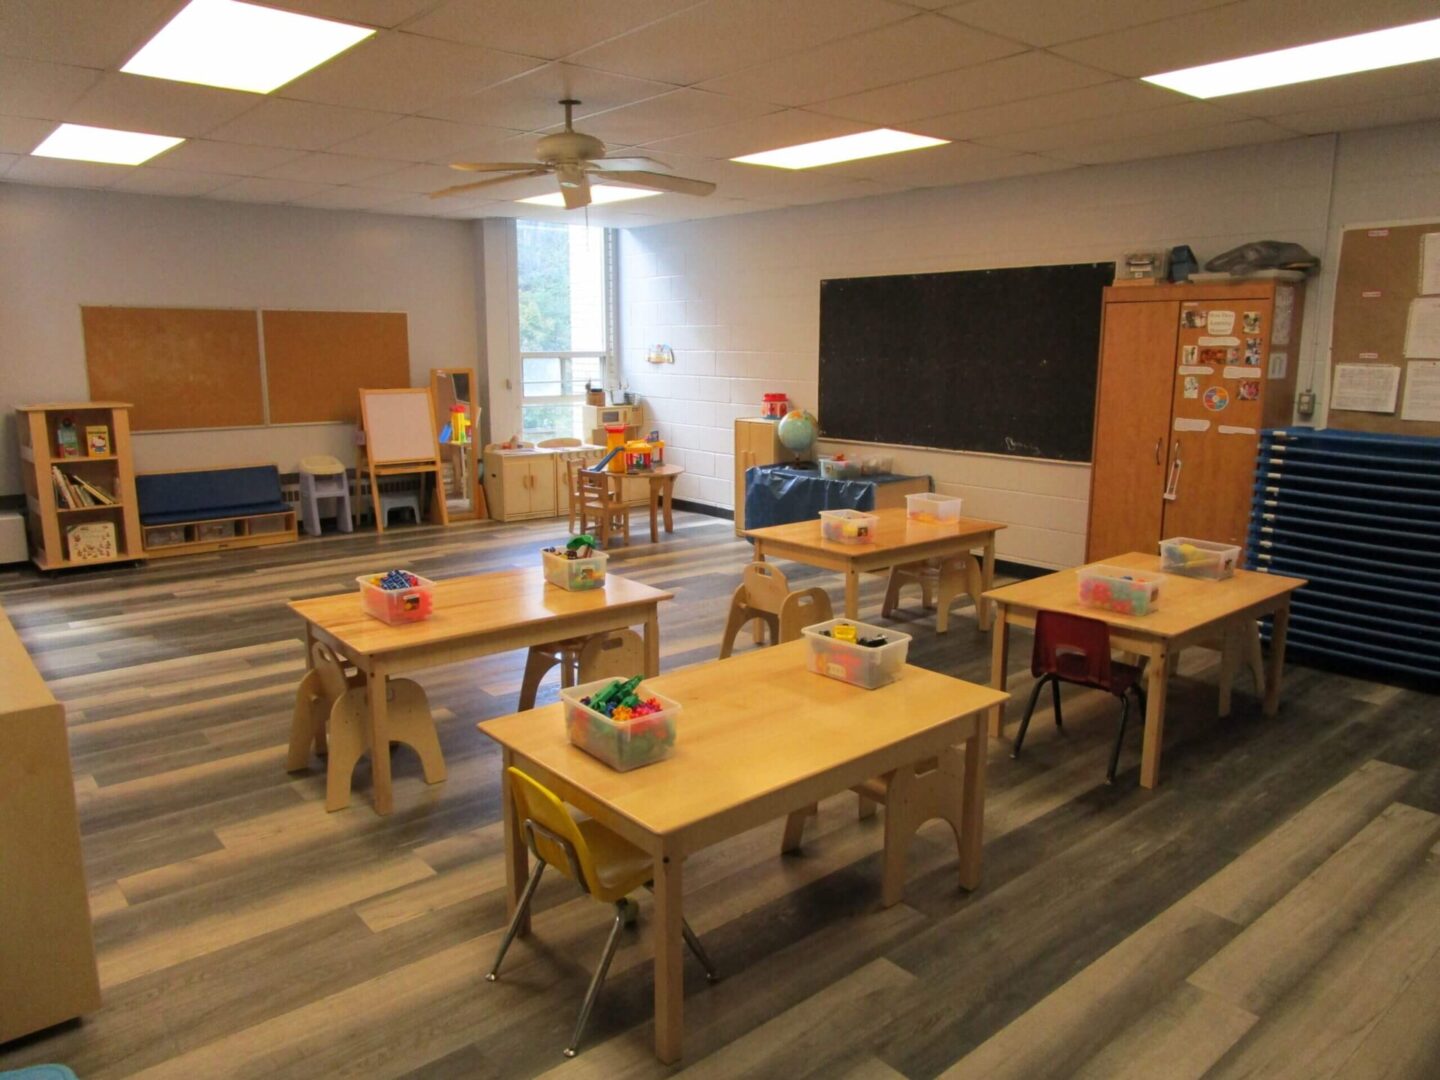 Picture of interior of preschool